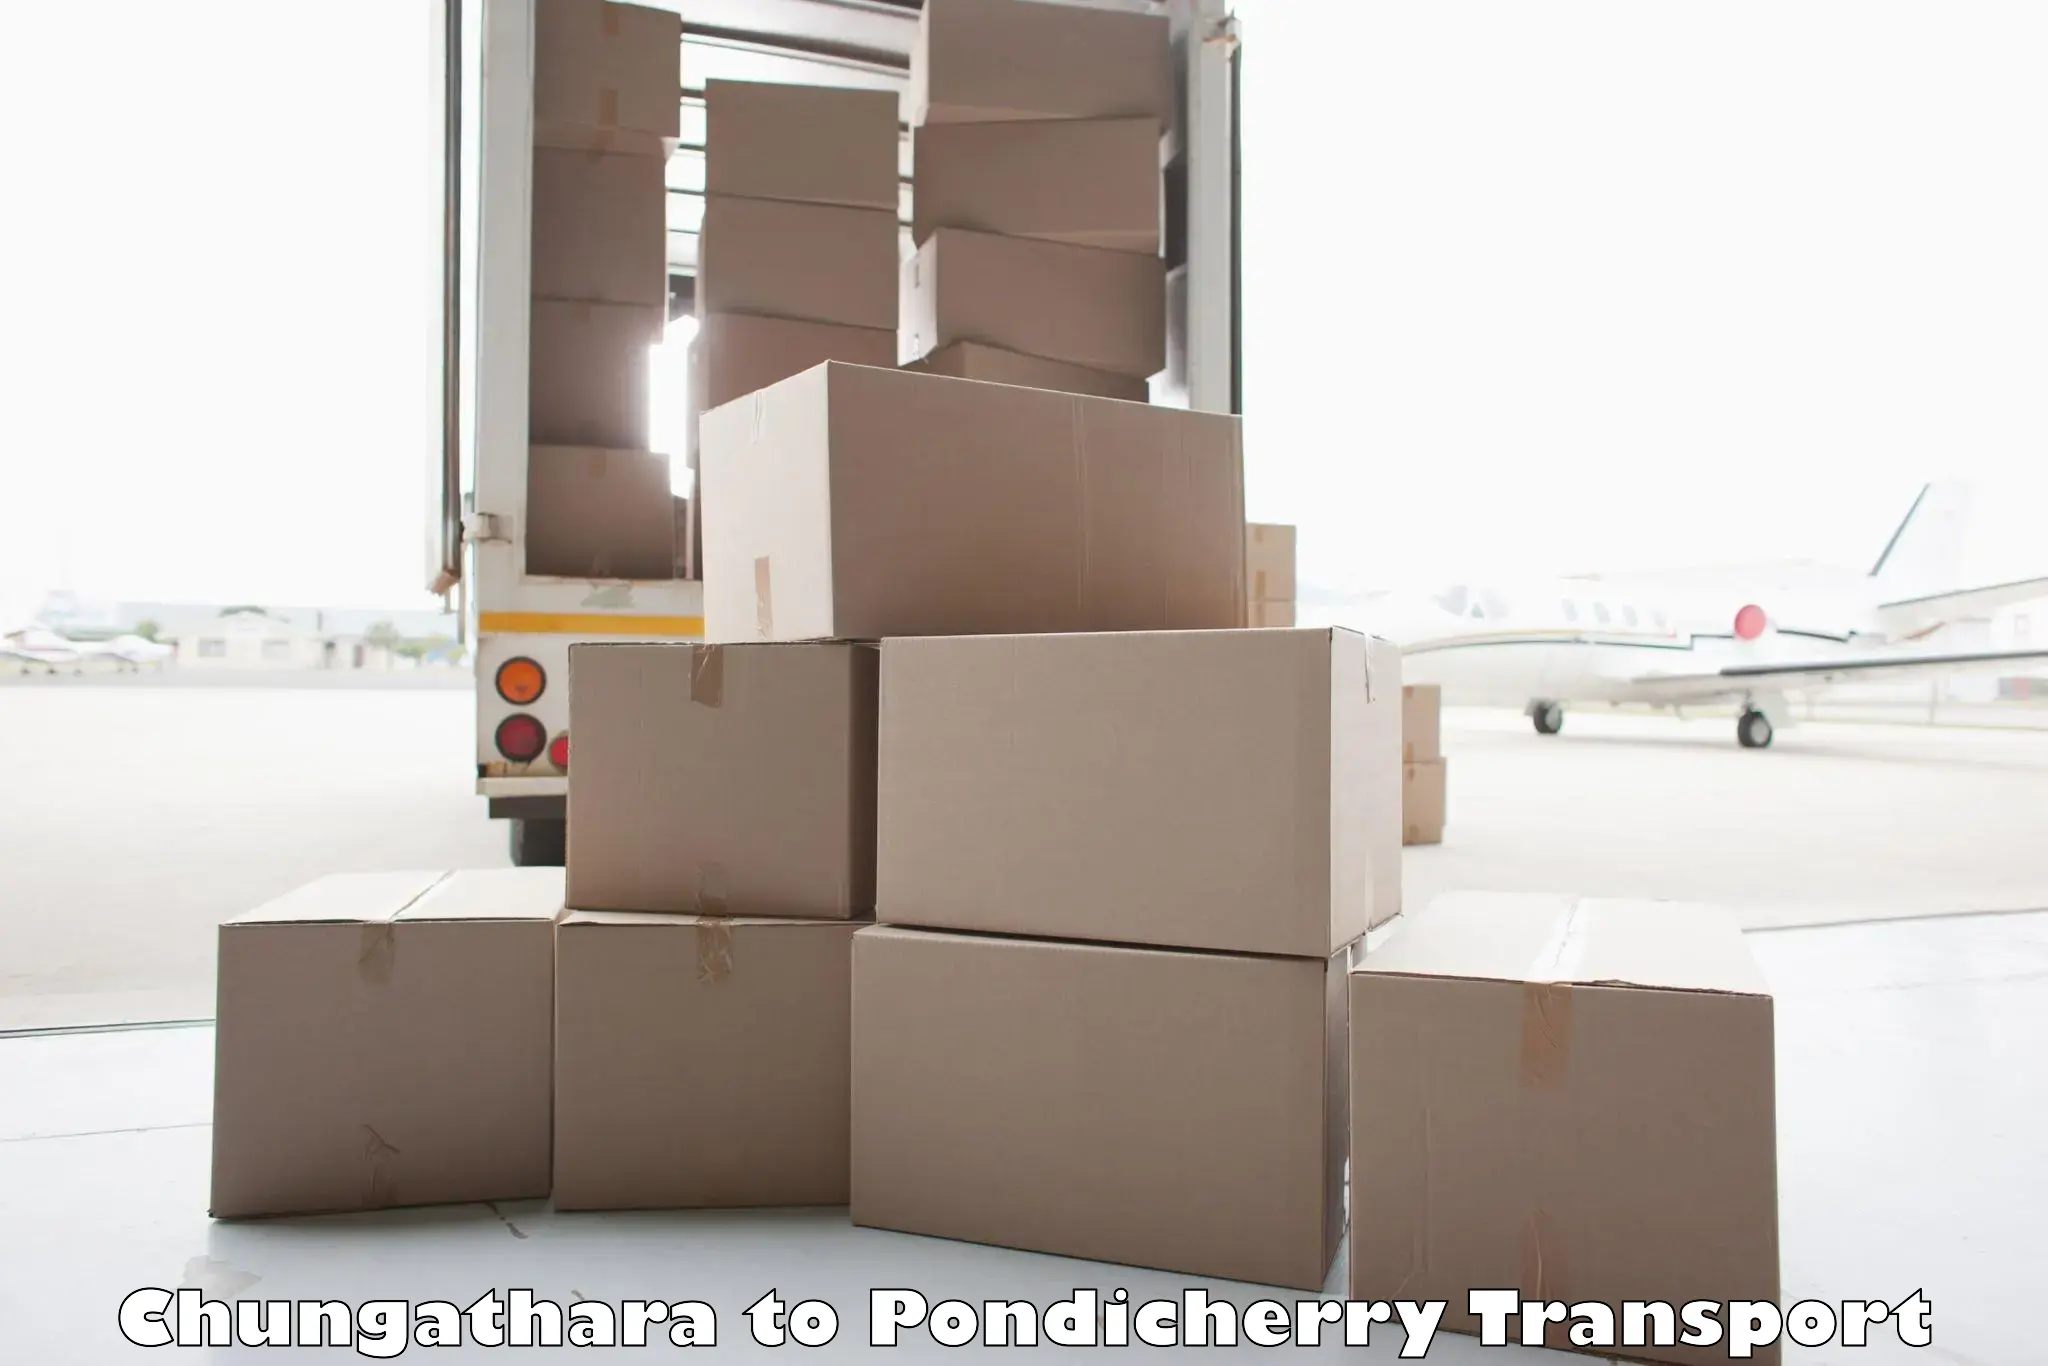 India truck logistics services Chungathara to Karaikal